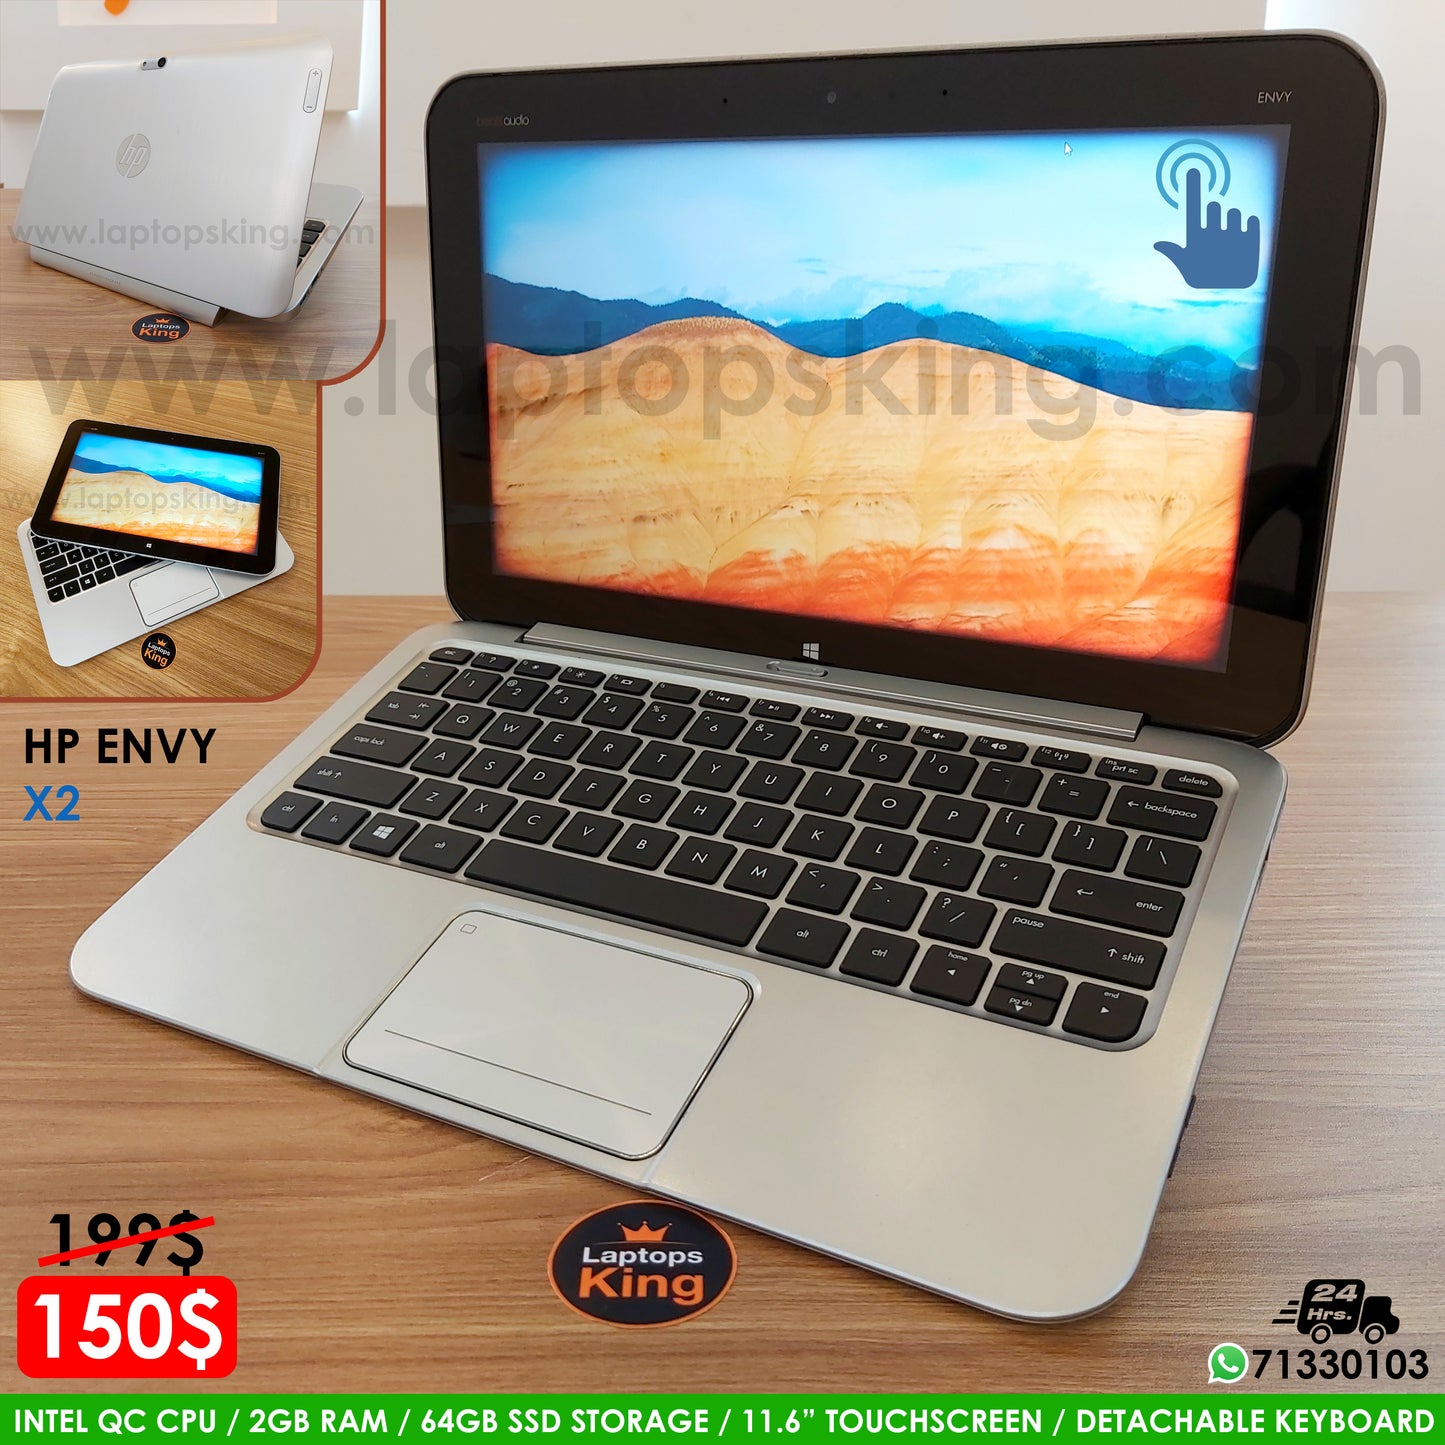 HP Envy X2 2in1 Detachable Laptop (Used Very Clean)